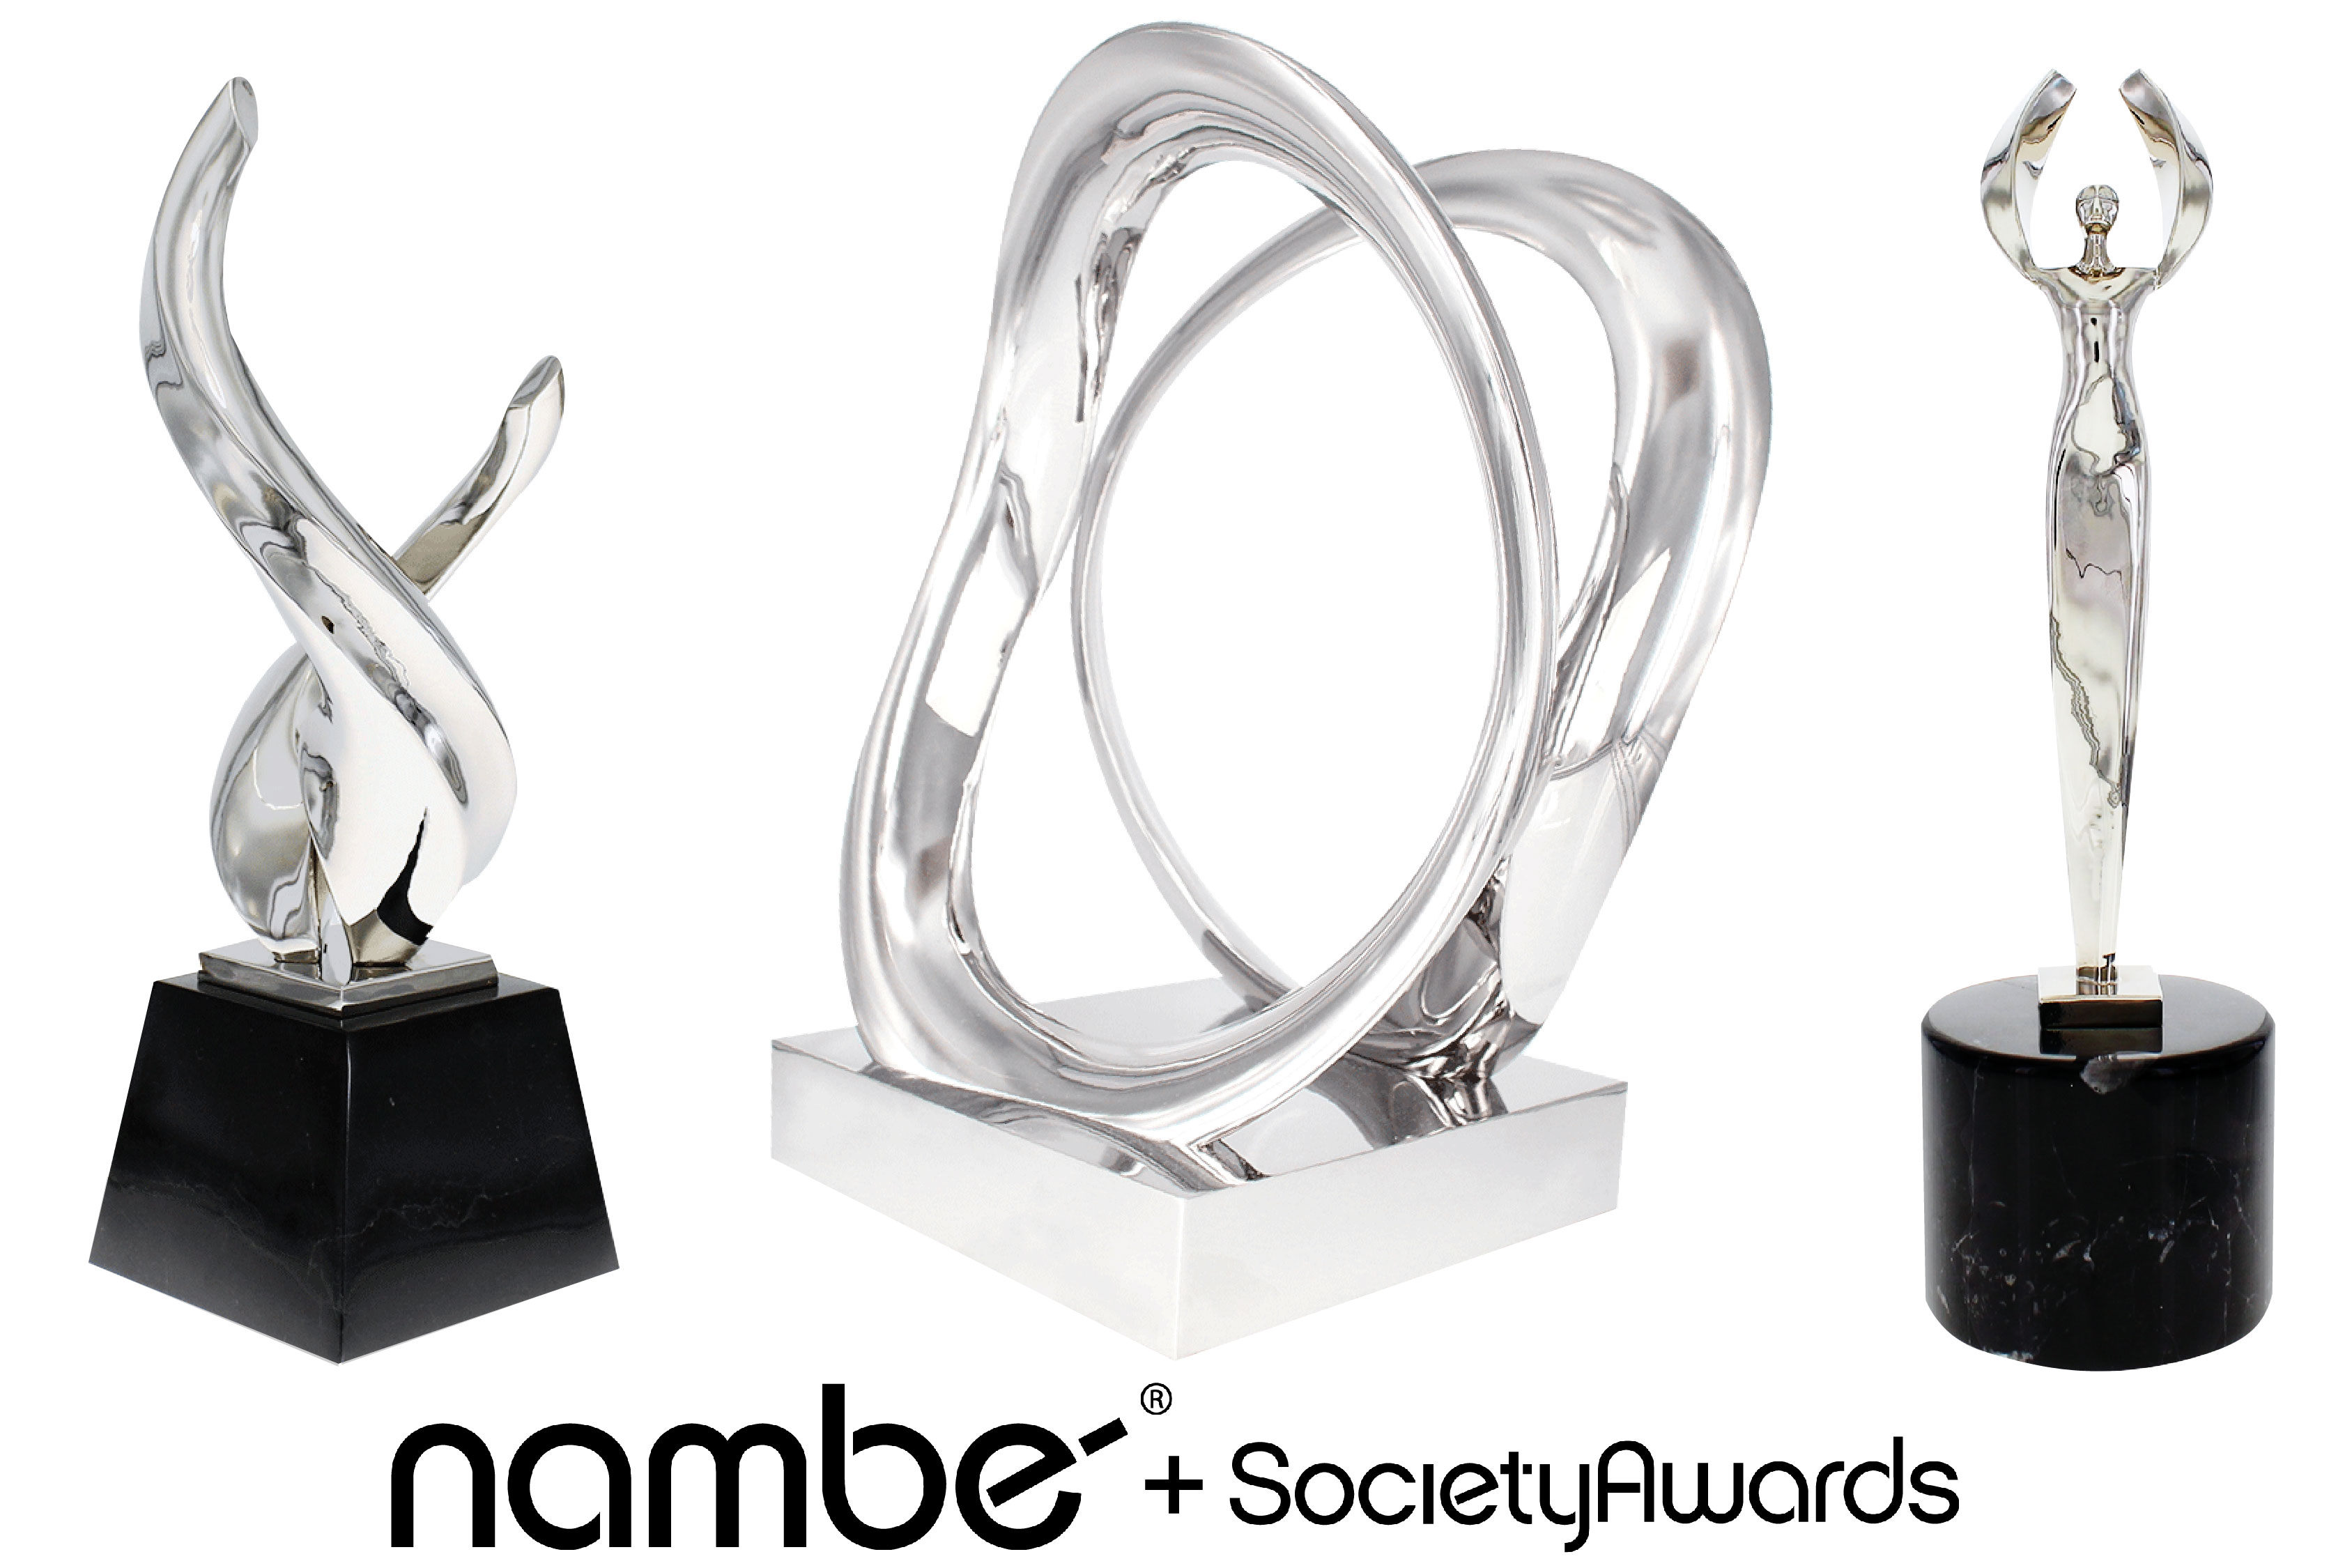 Nambé + Society Awards Designer Trophy Collection